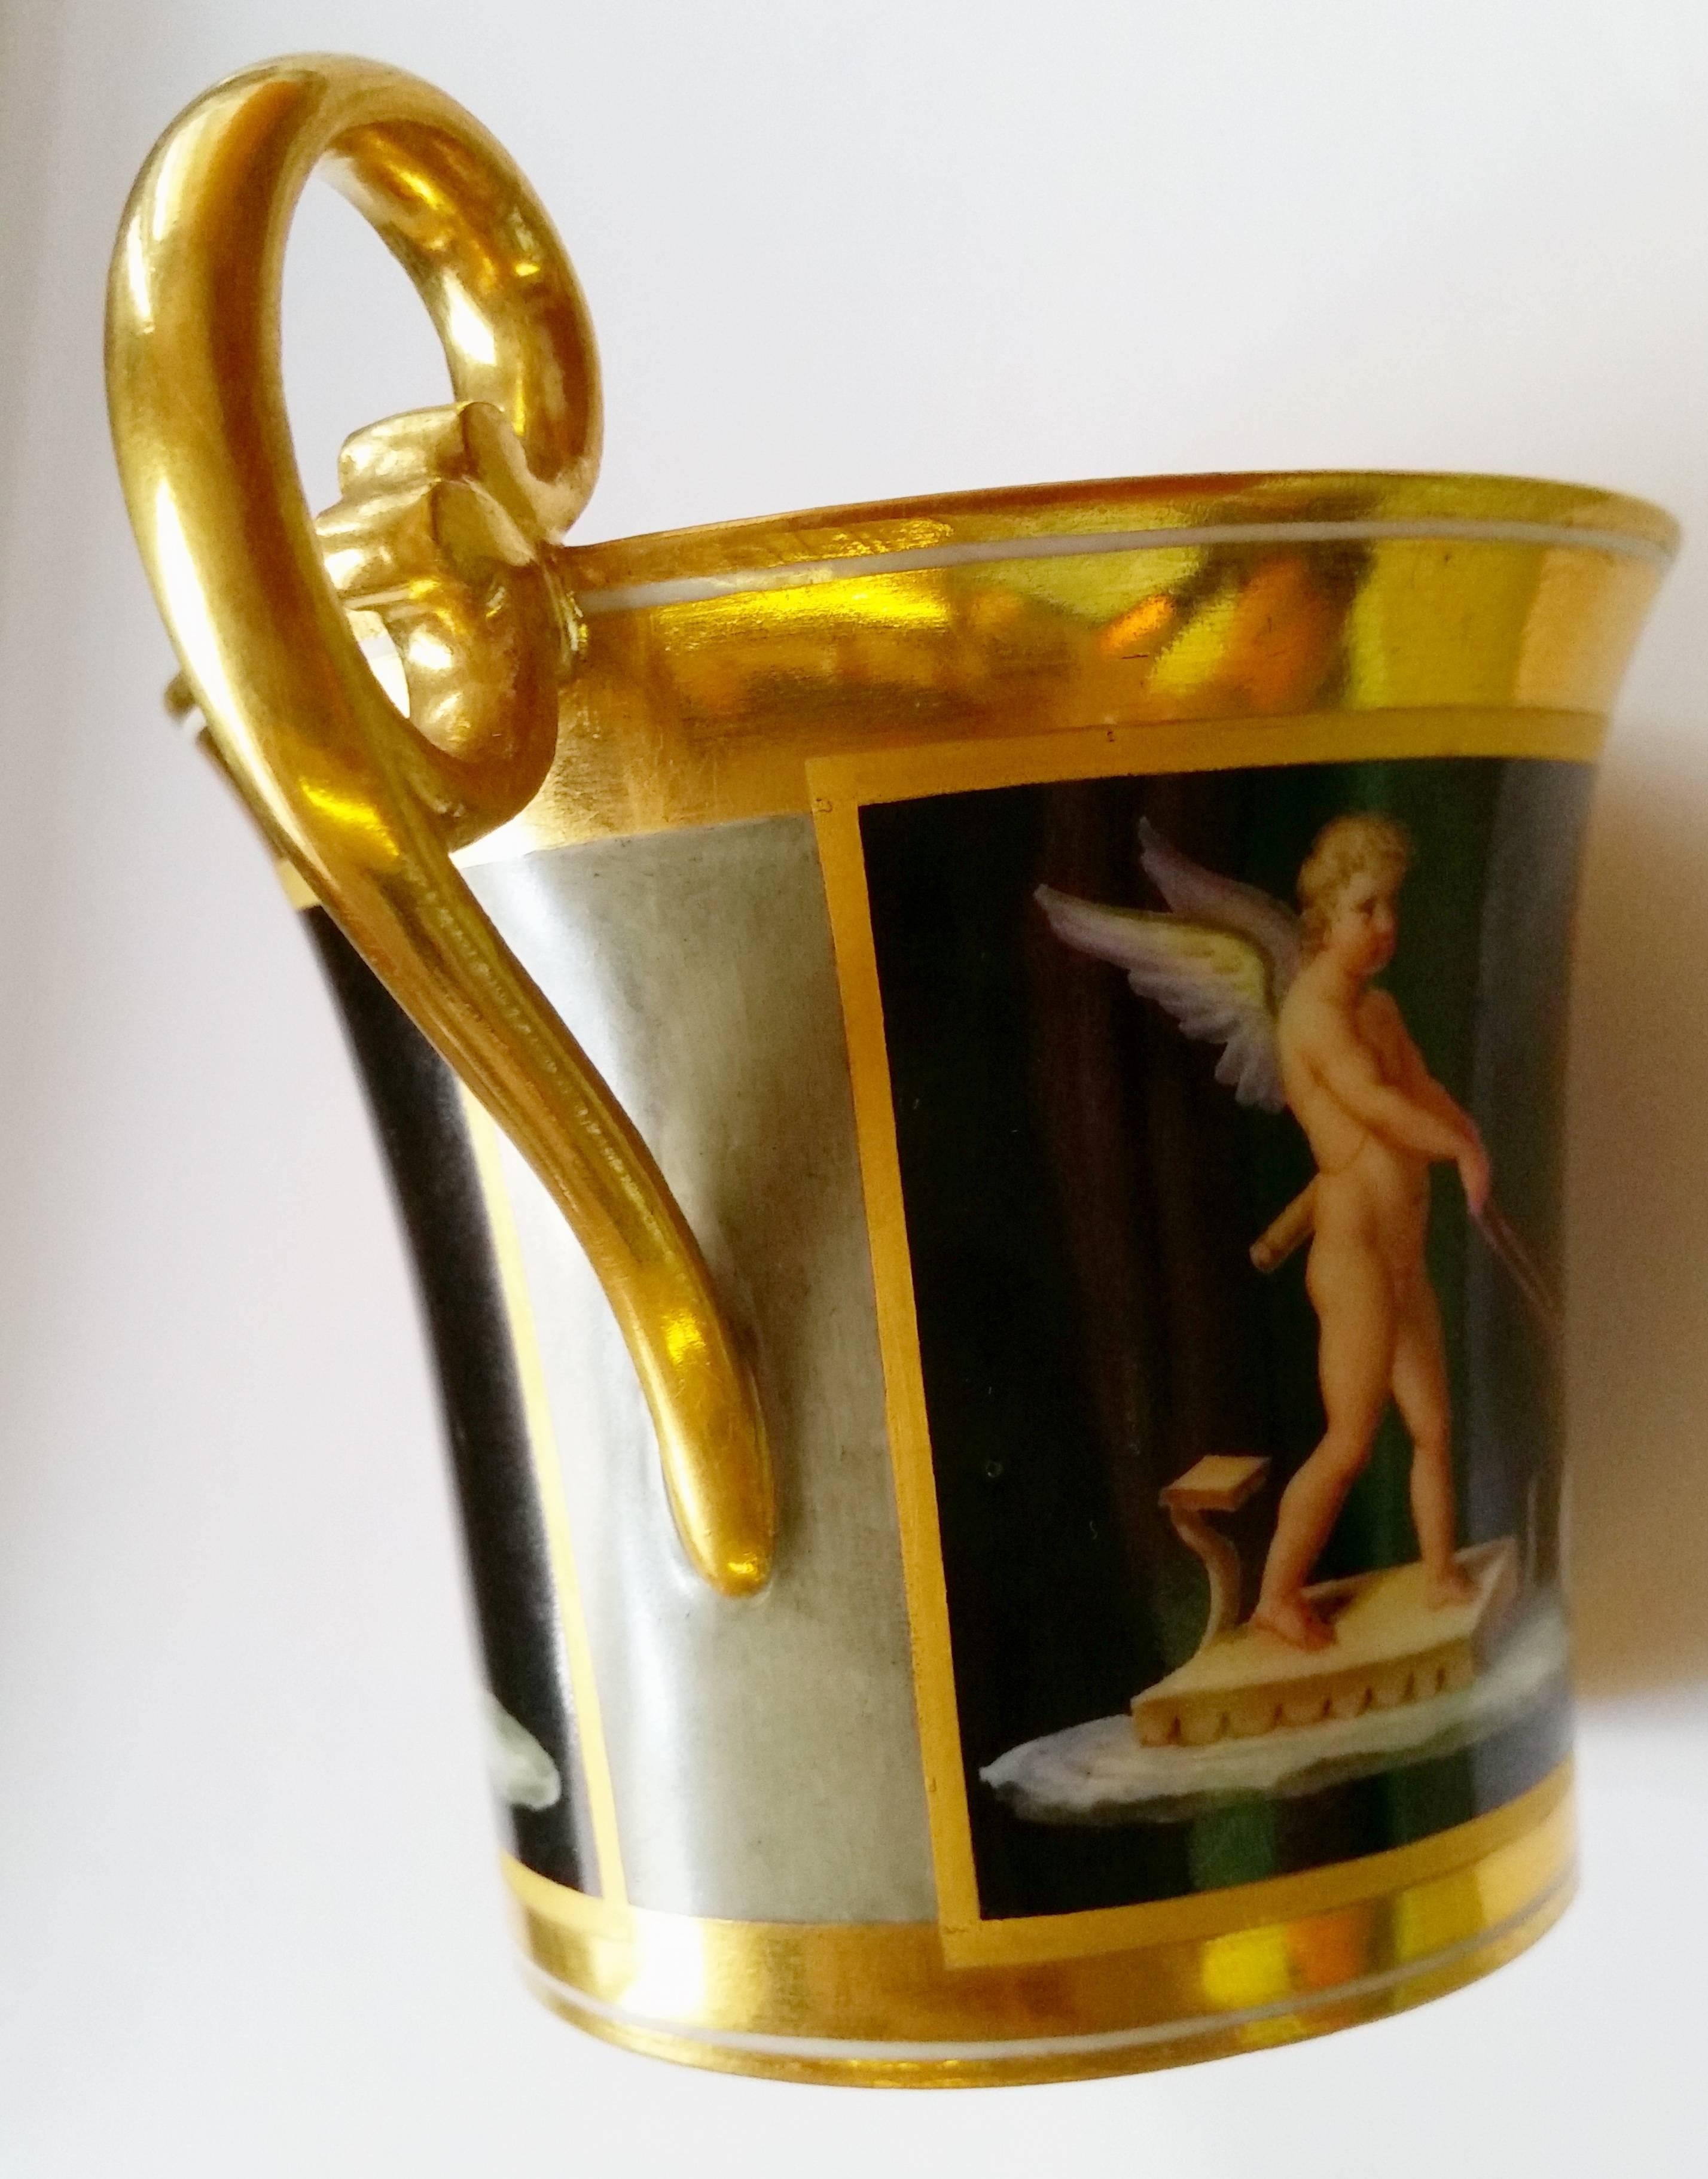 Austrian Vienna Imperial Porcelain Cup Saucer Cherubs Driving Chariots Dated 1814 Austria